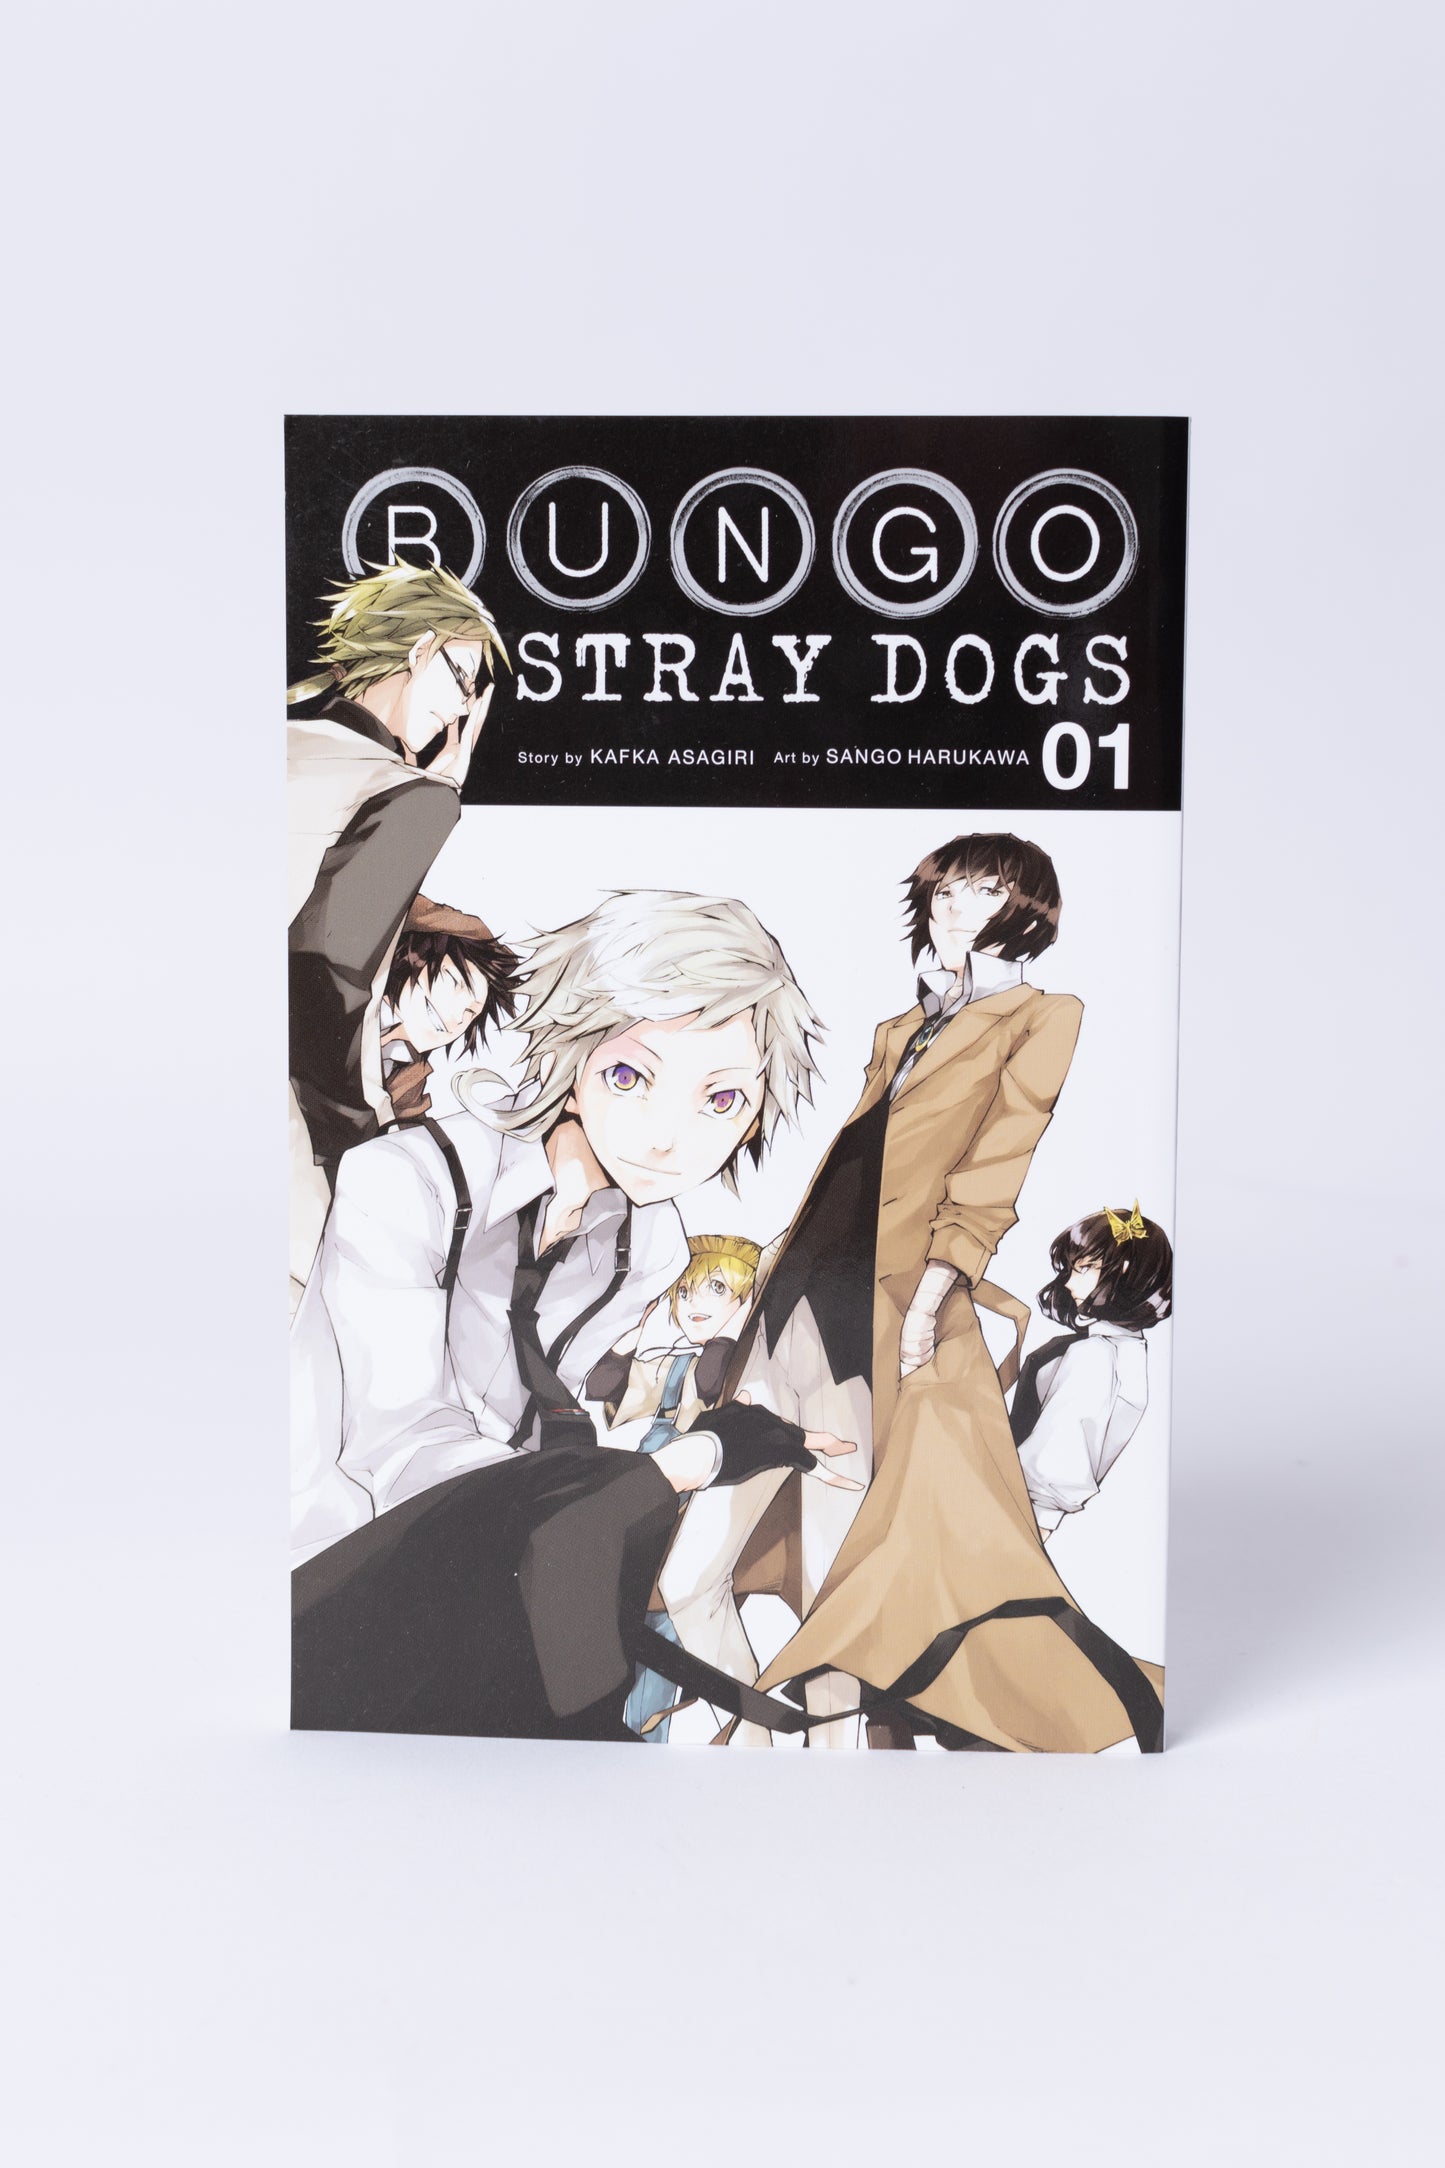 BUNGO STRAY DOGS VOL 01